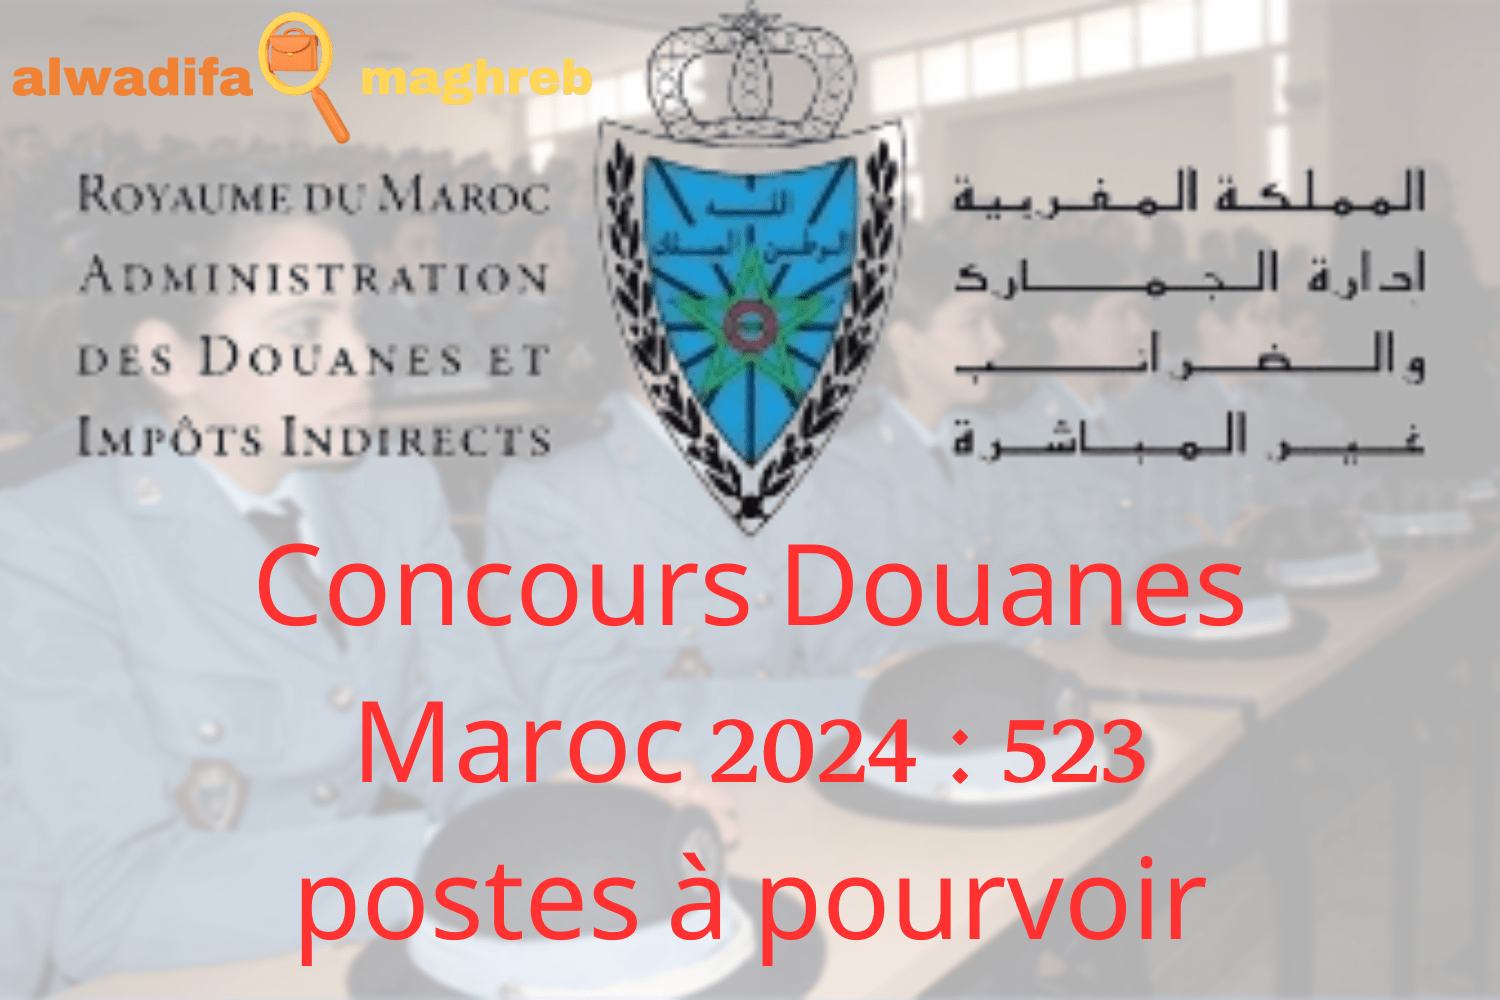 Concours Douanes Maroc 2024